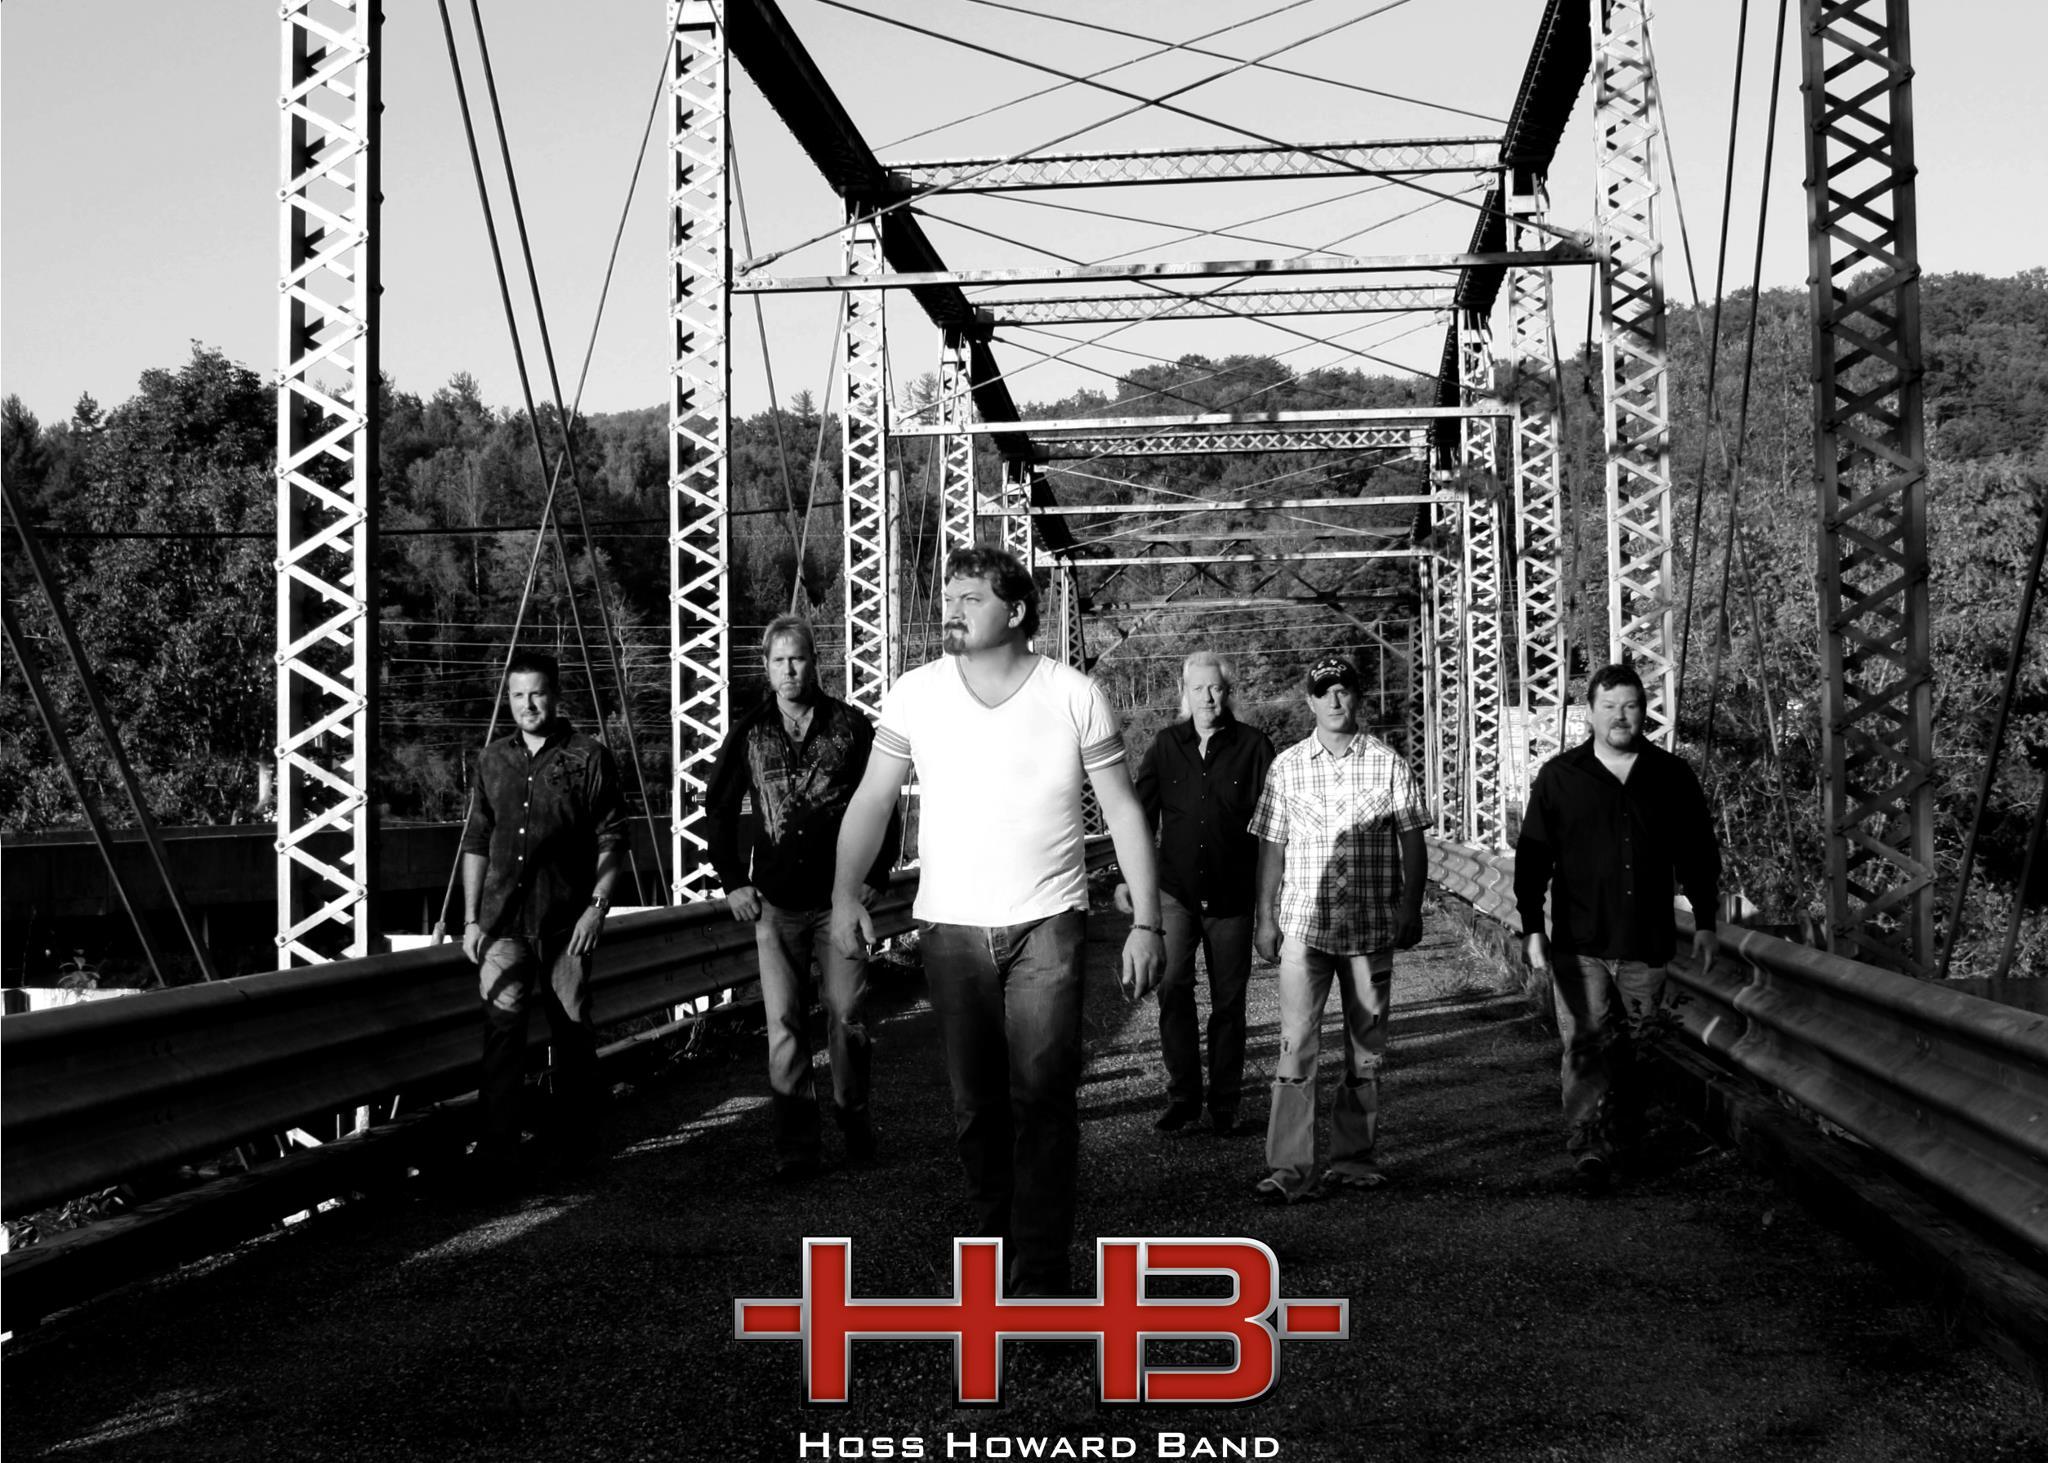 The Hoss Howard Band